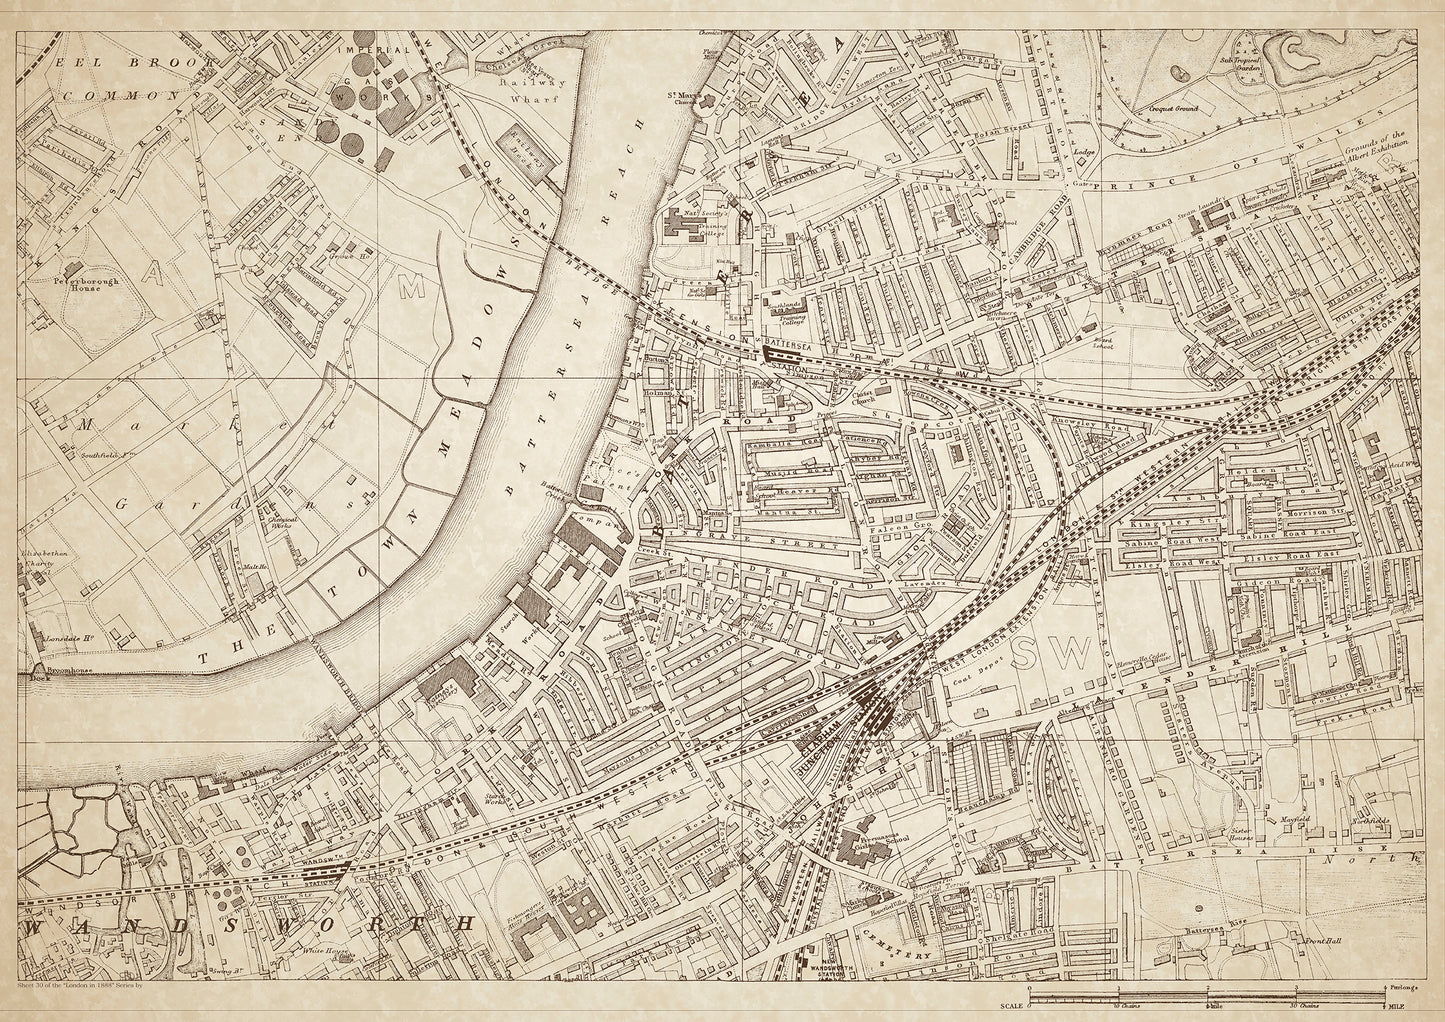 London in 1888 Series - showing Wandsworth, Eel Brook Common, Battersea, Lavender Hill - sheet 30